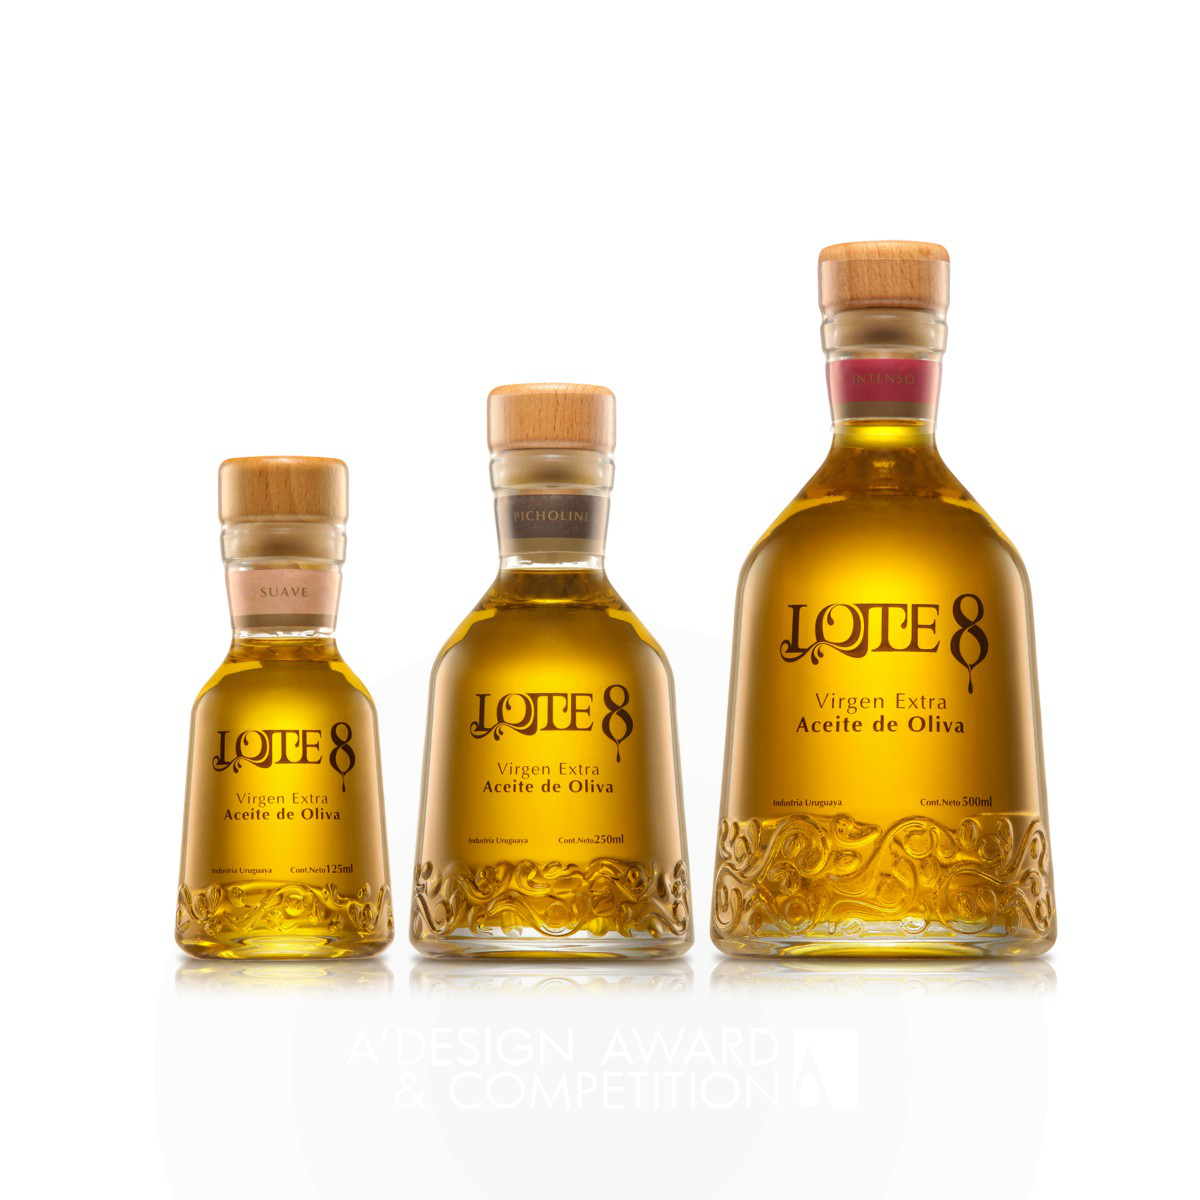 Lote 8 Olive oil Packaging by Tridimage & Paz Martel Bronze Packaging Design Award Winner 2015 